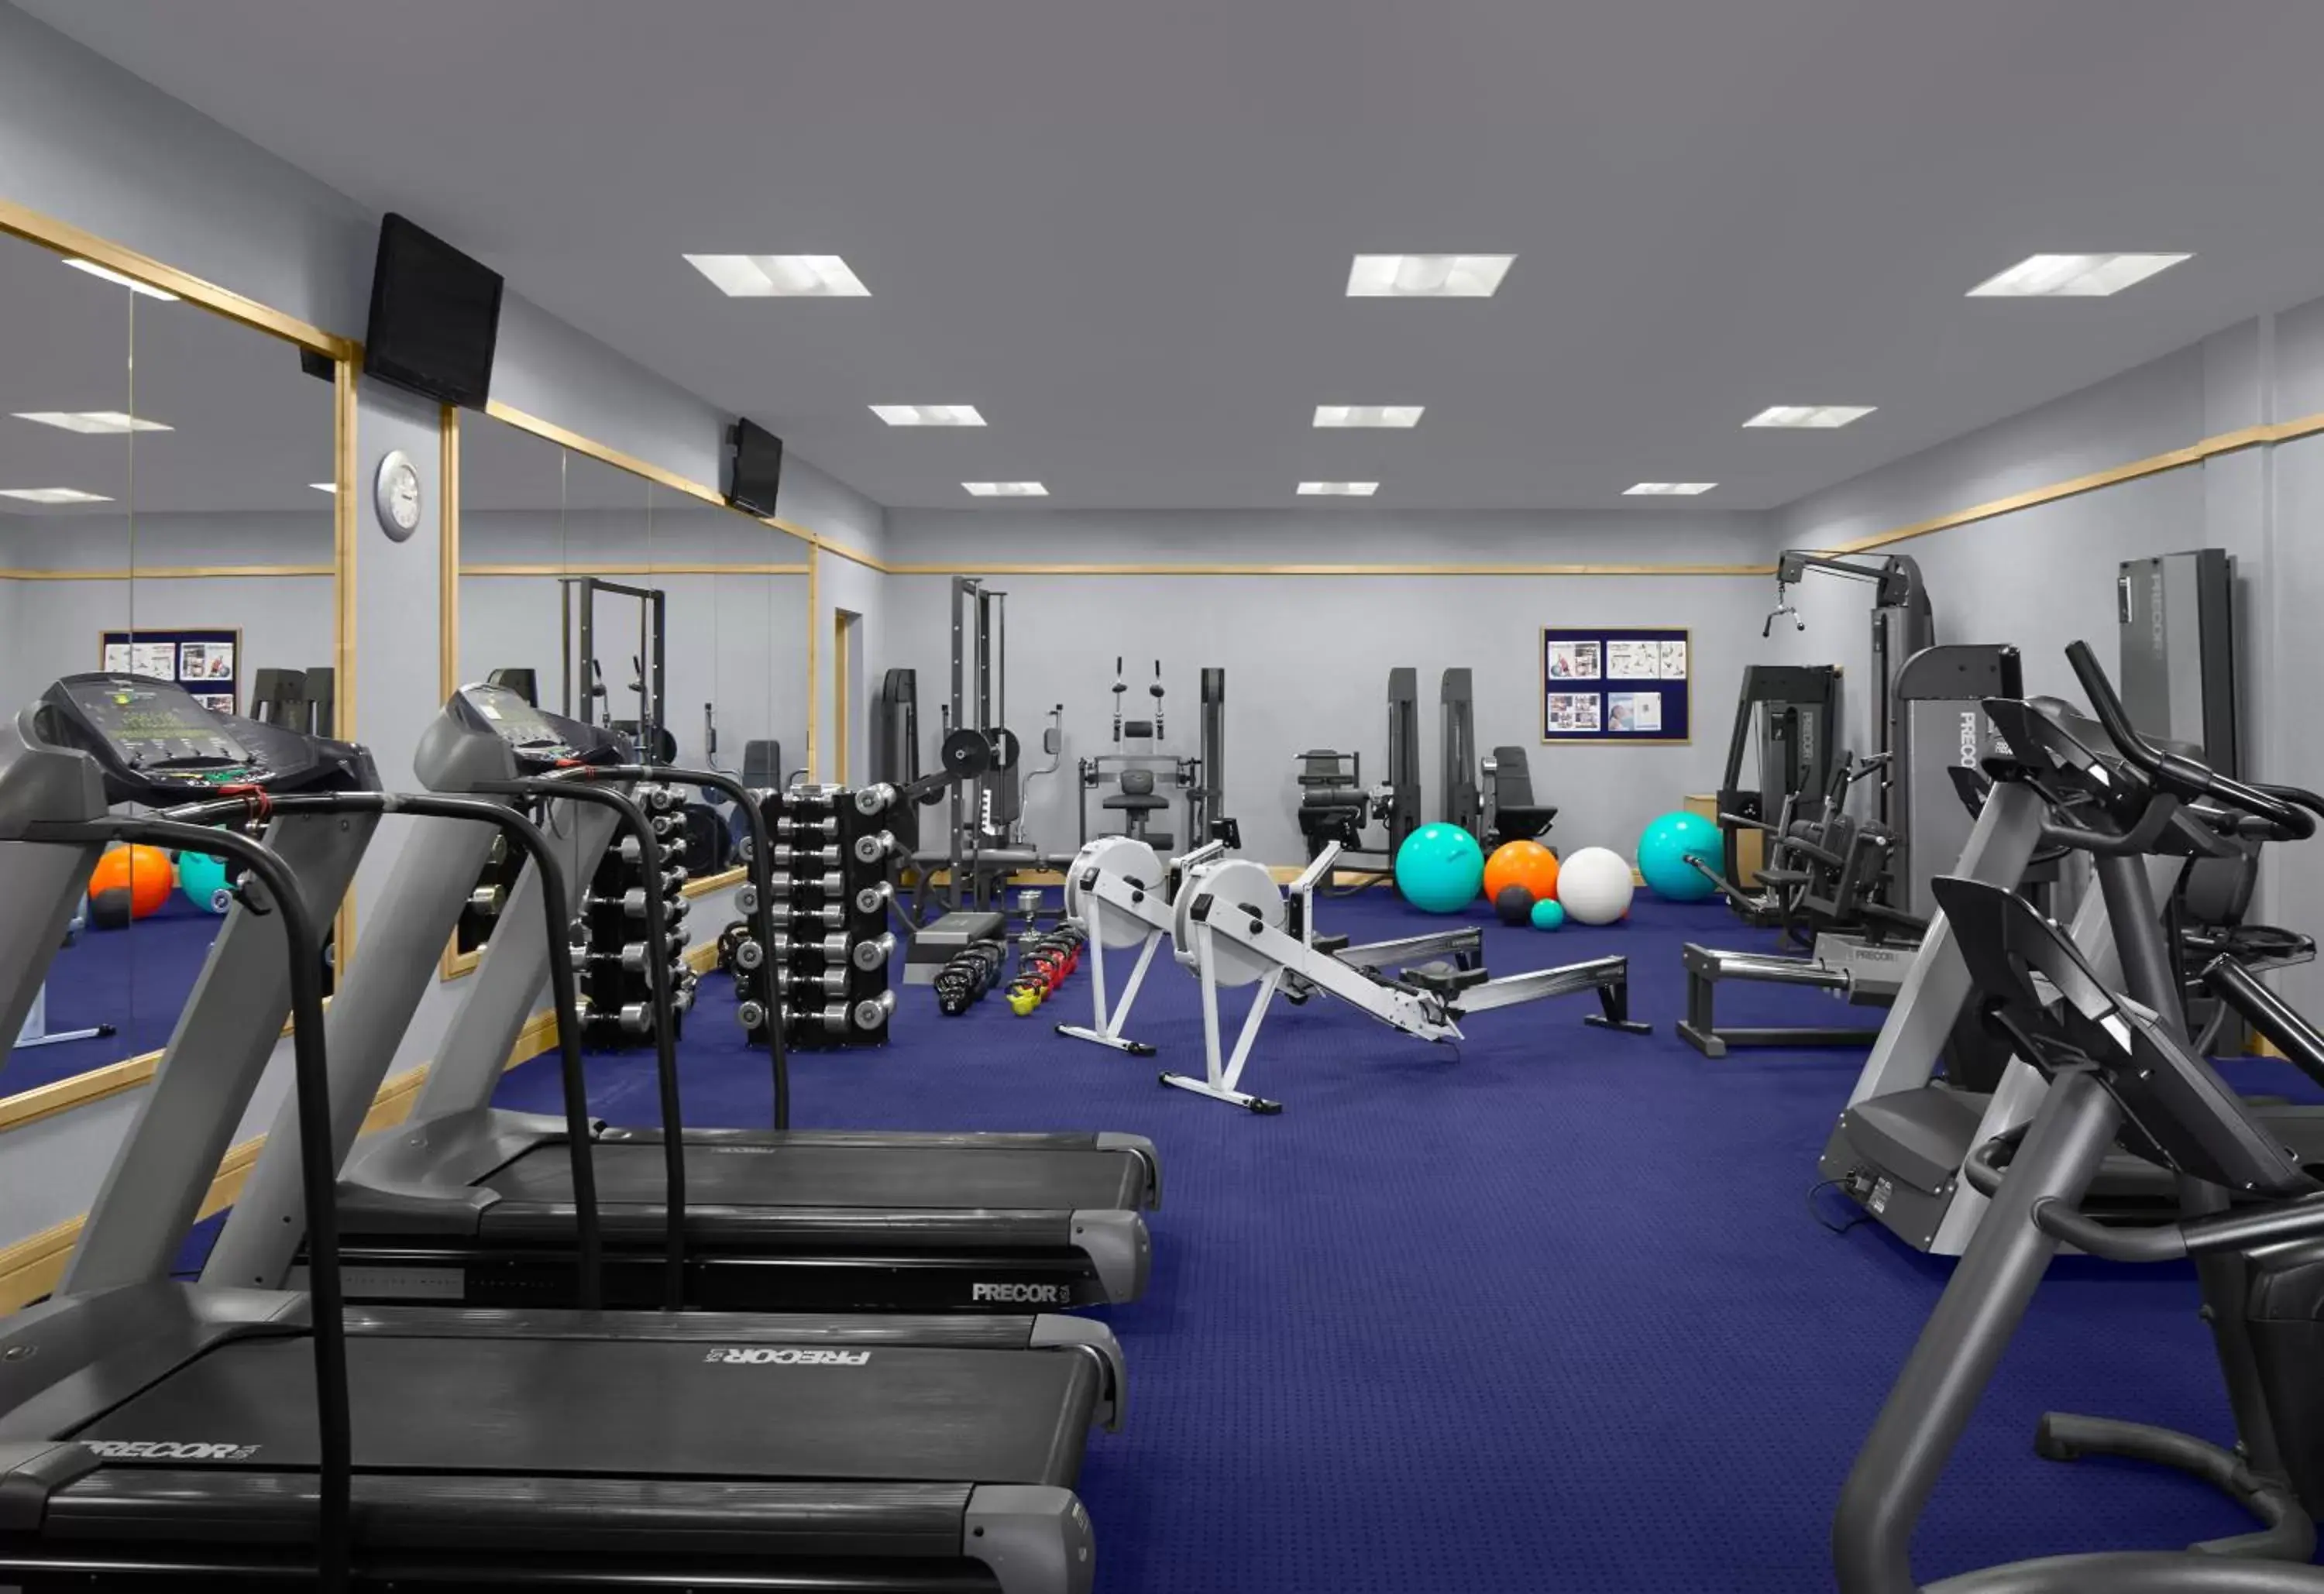 Fitness centre/facilities, Fitness Center/Facilities in Radisson BLU Hotel & Spa, Sligo